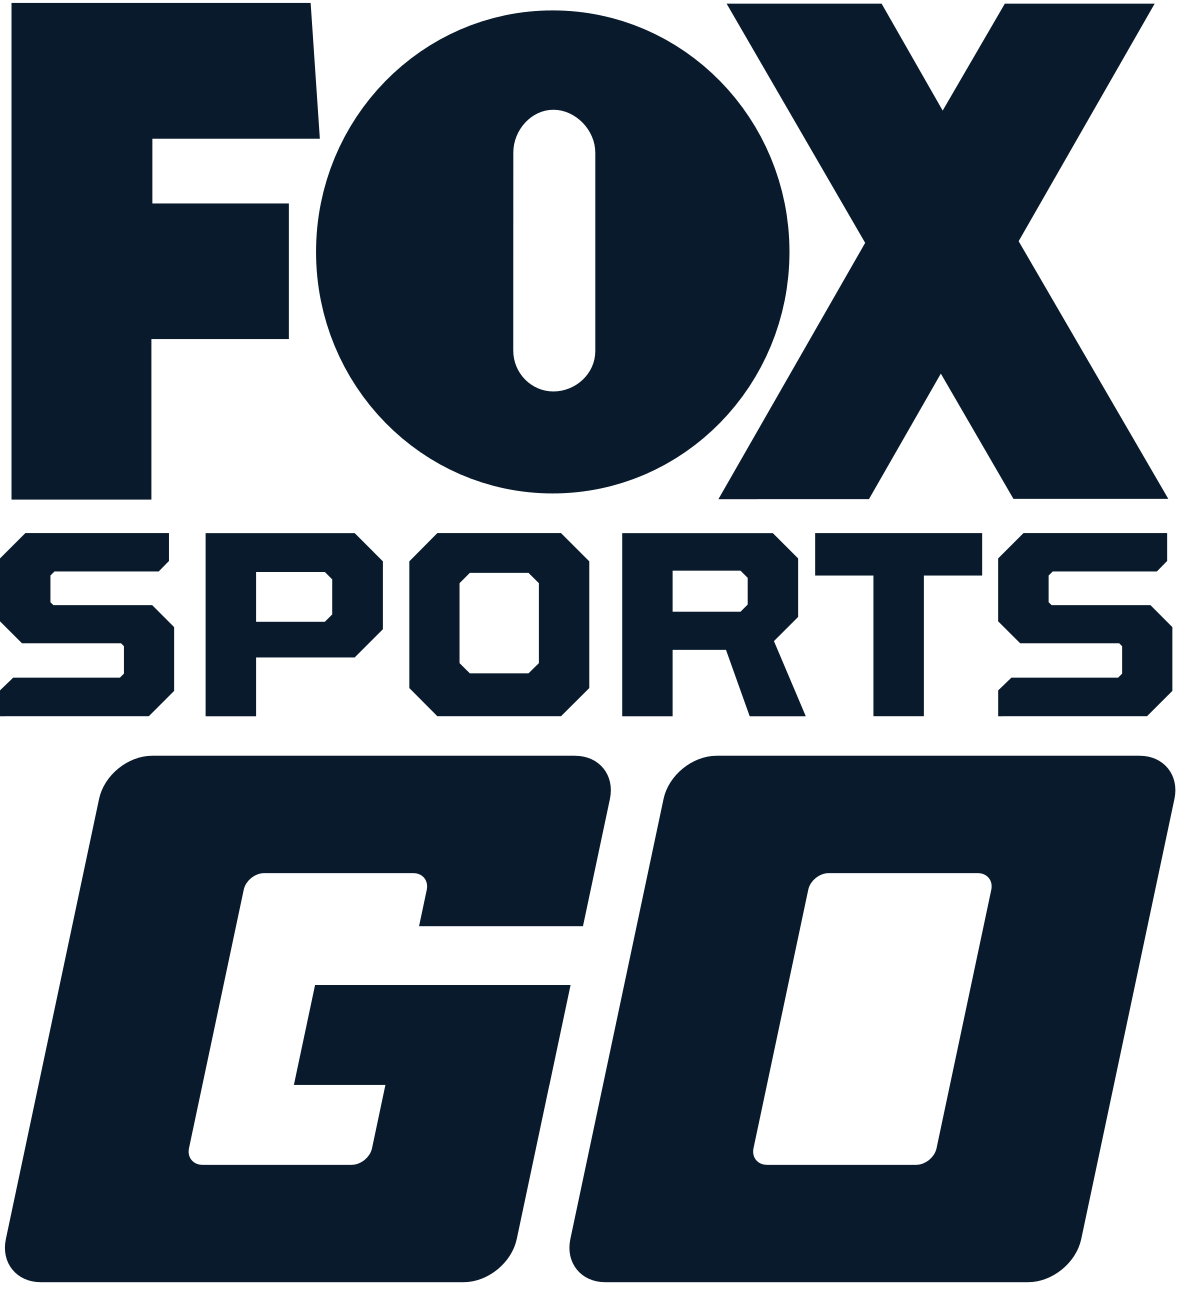 Fox сеть. Фокс Спортс. Fox Sports 1 logo. Fox Sports Networks. Спорт с go.